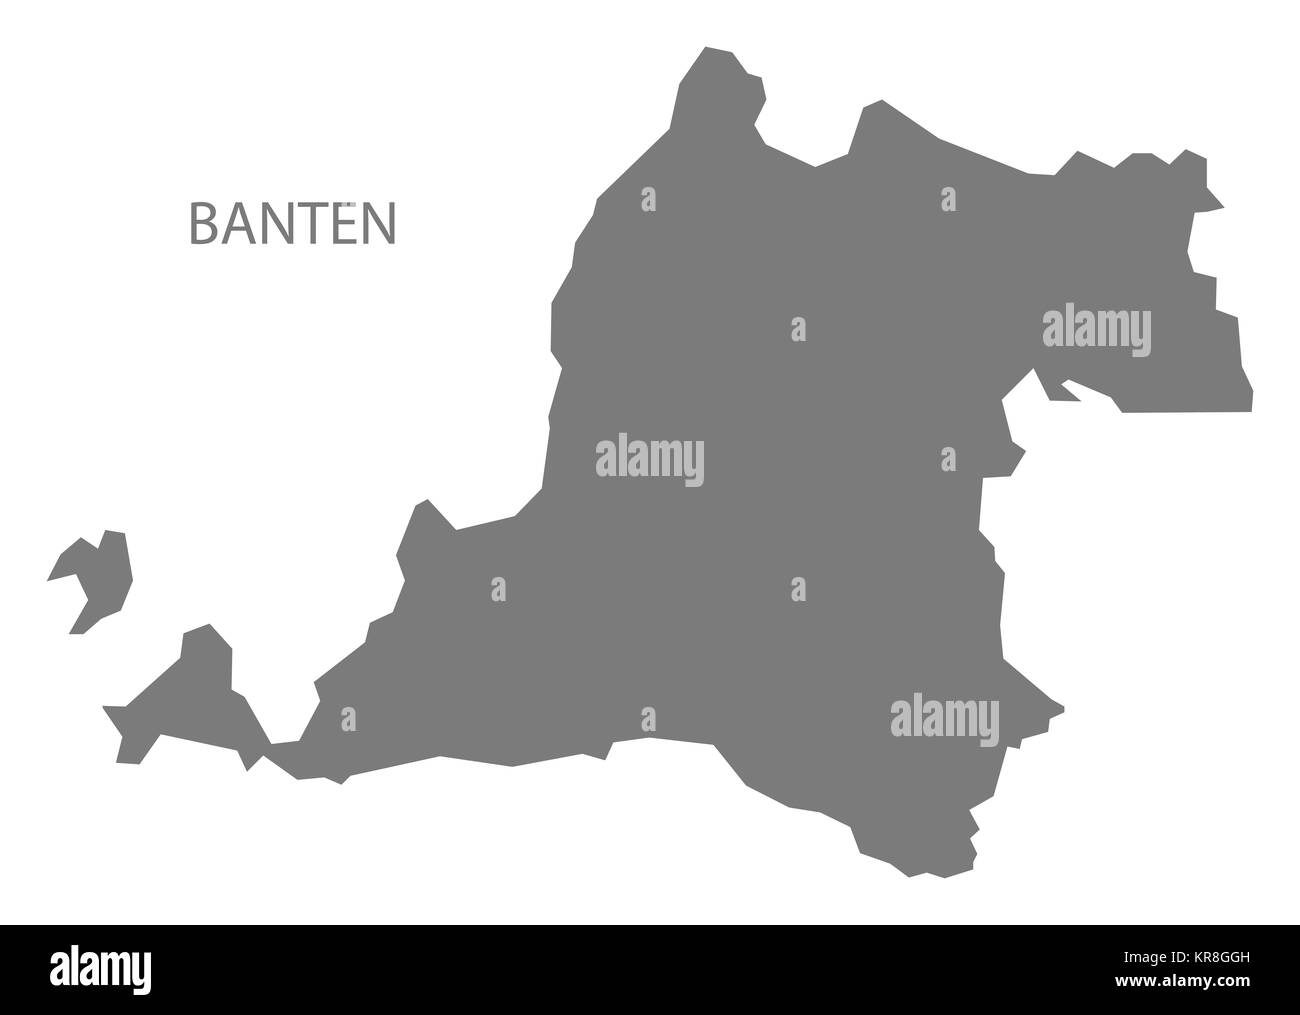 Banten Indonesia Map grey Stock Photo